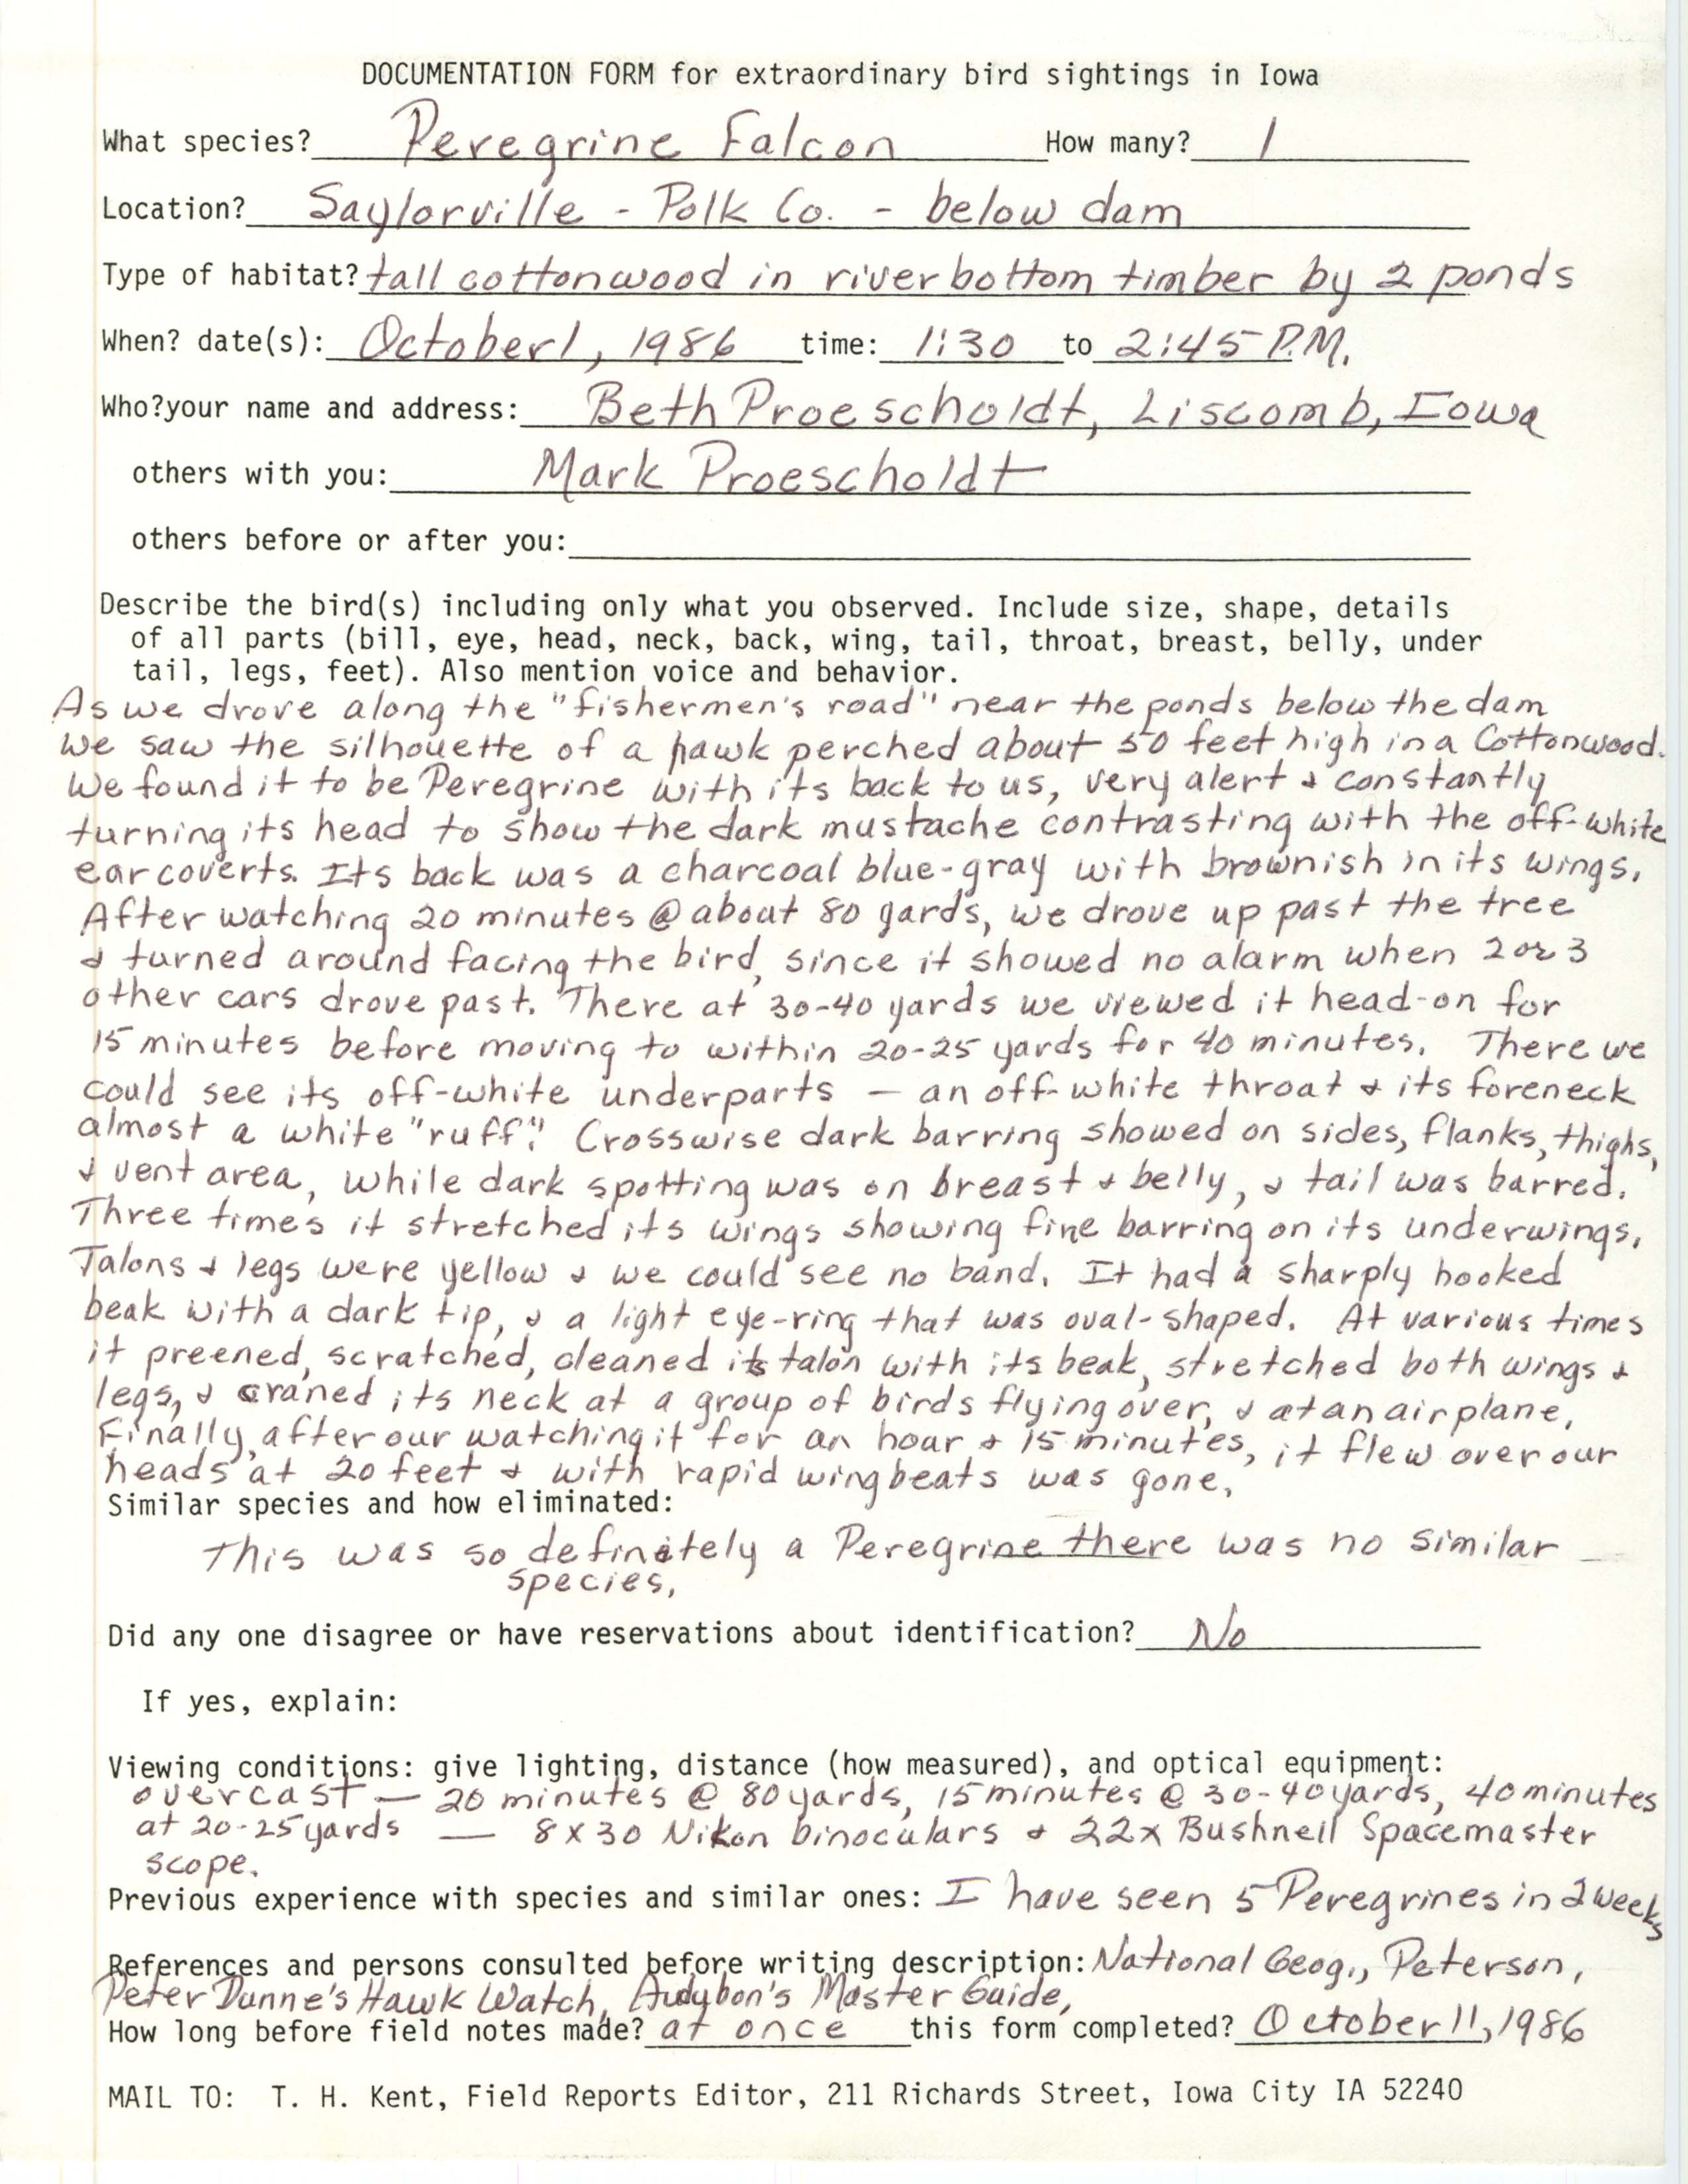 Rare bird documentation form for Peregrine Falcon at Saylorville, 1986